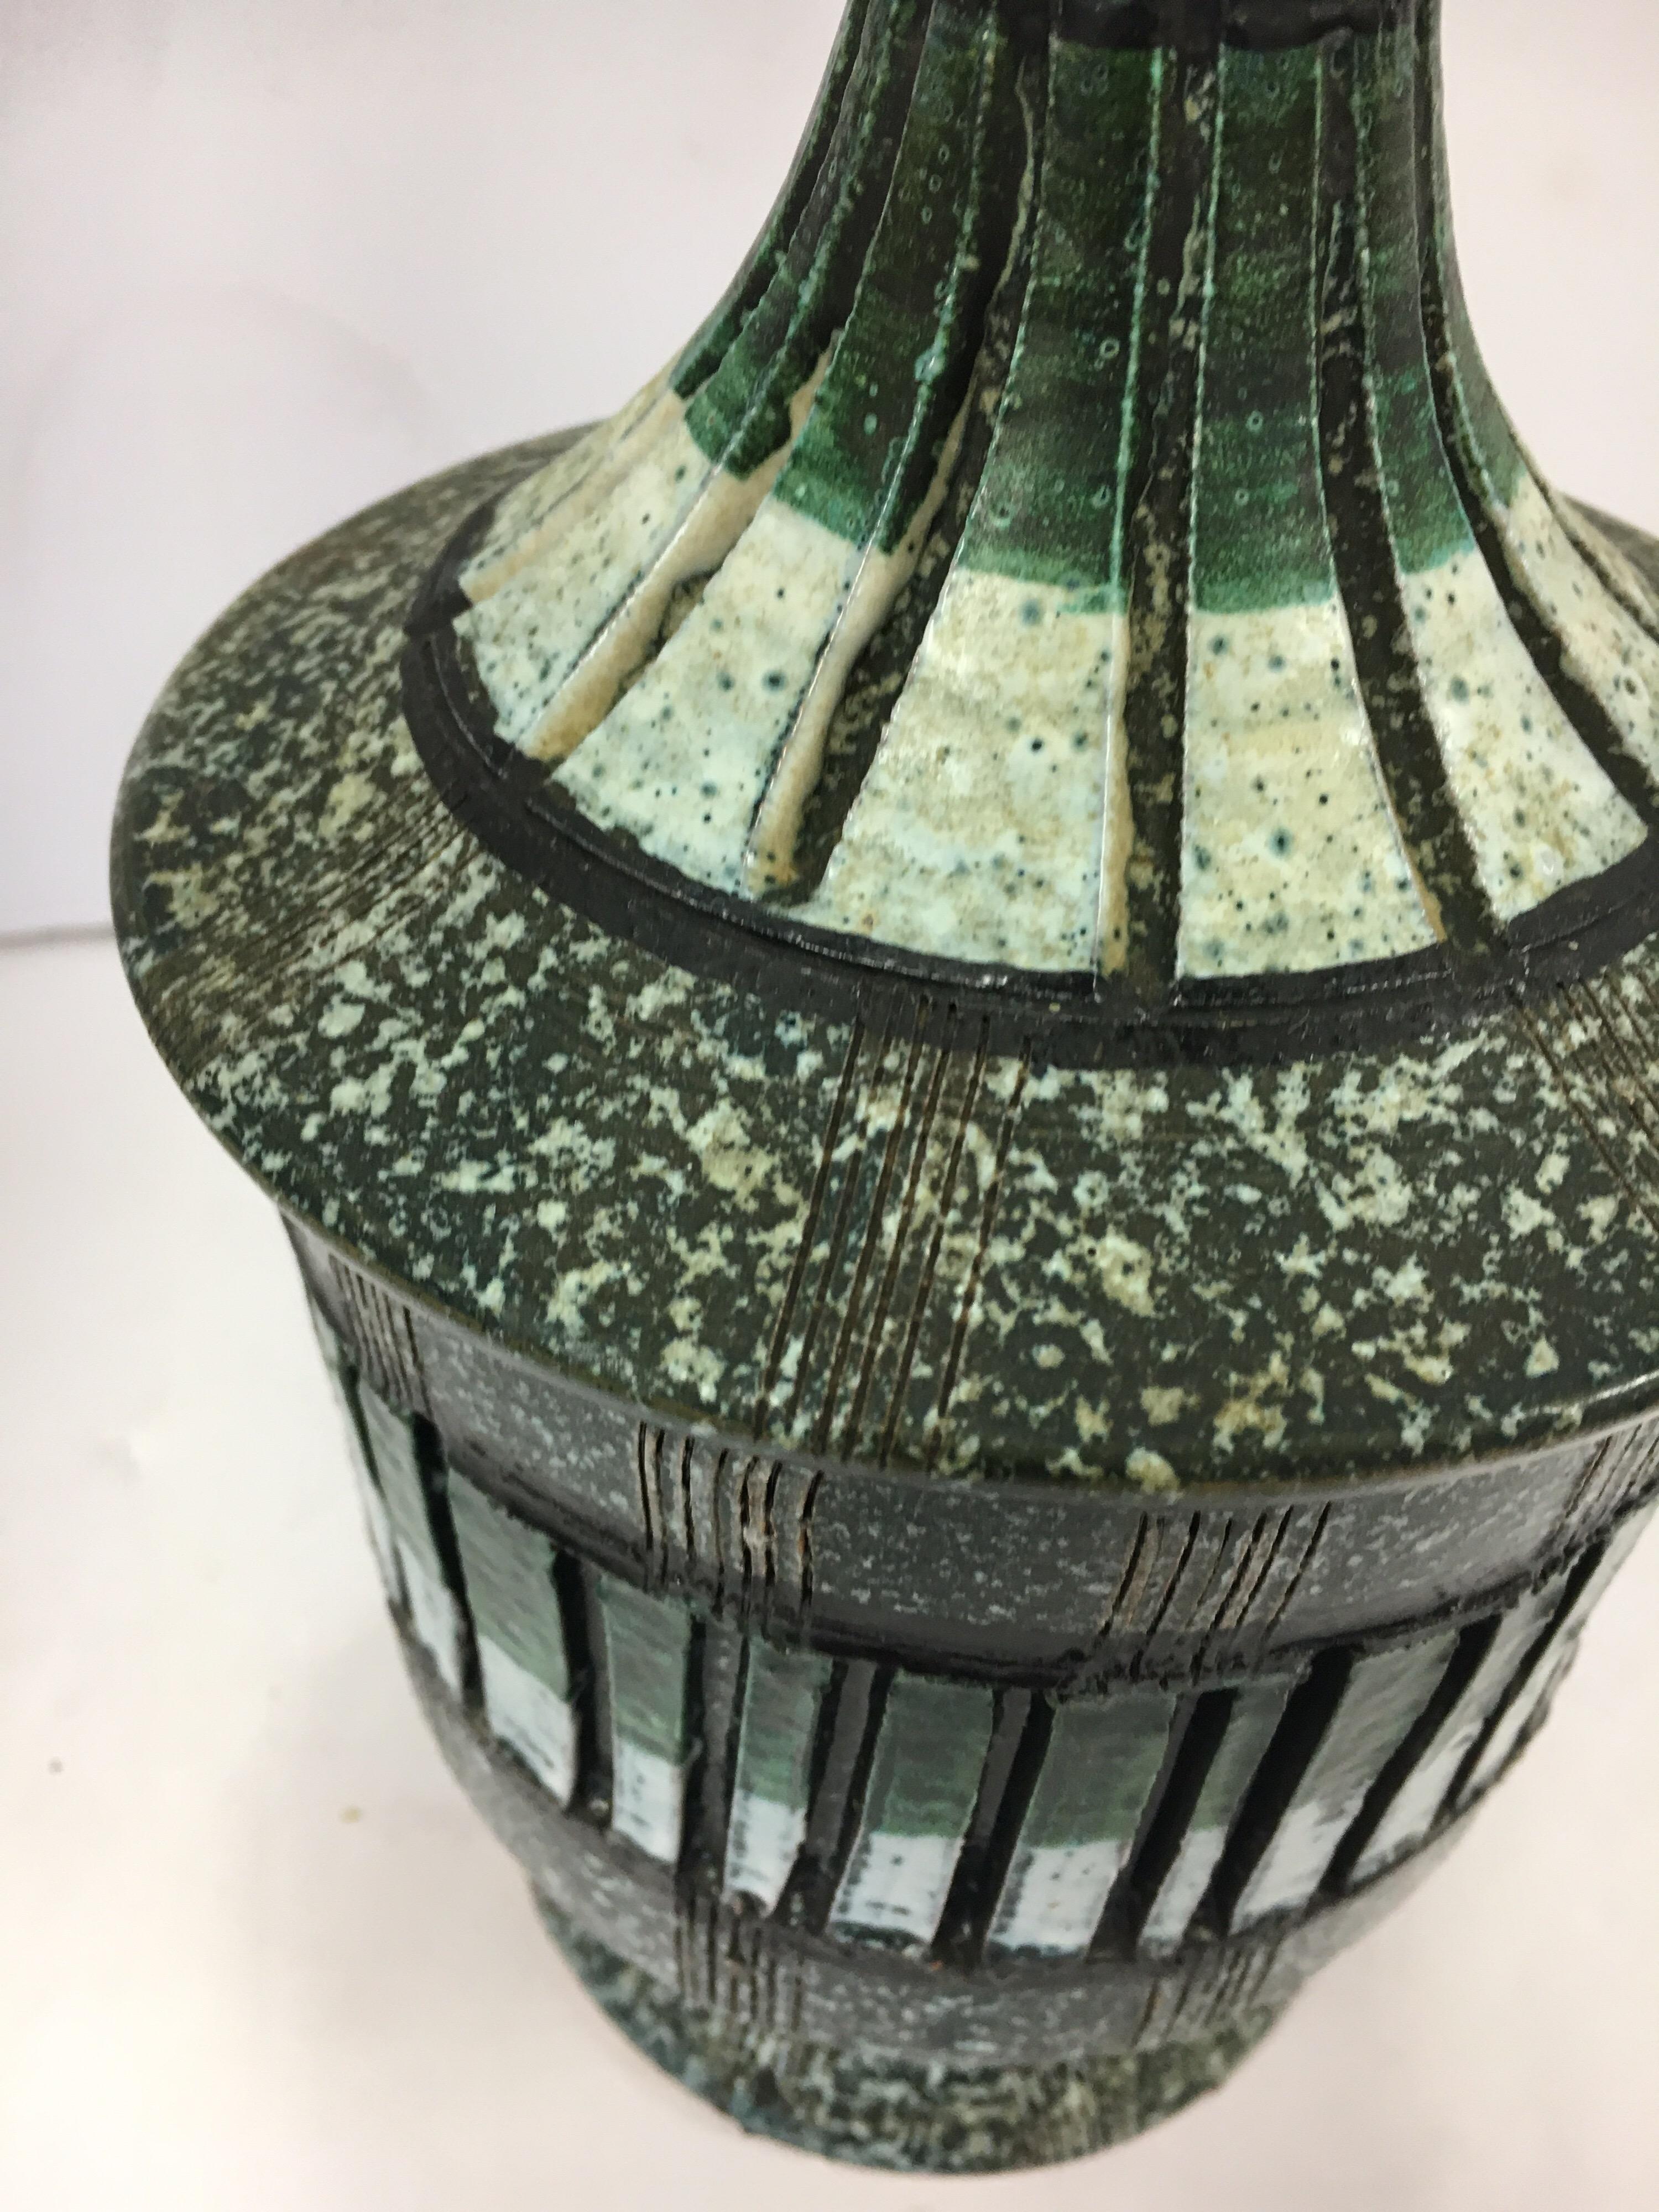 Made in Italy Signed Covered Urn Vase Jar (Keramik)